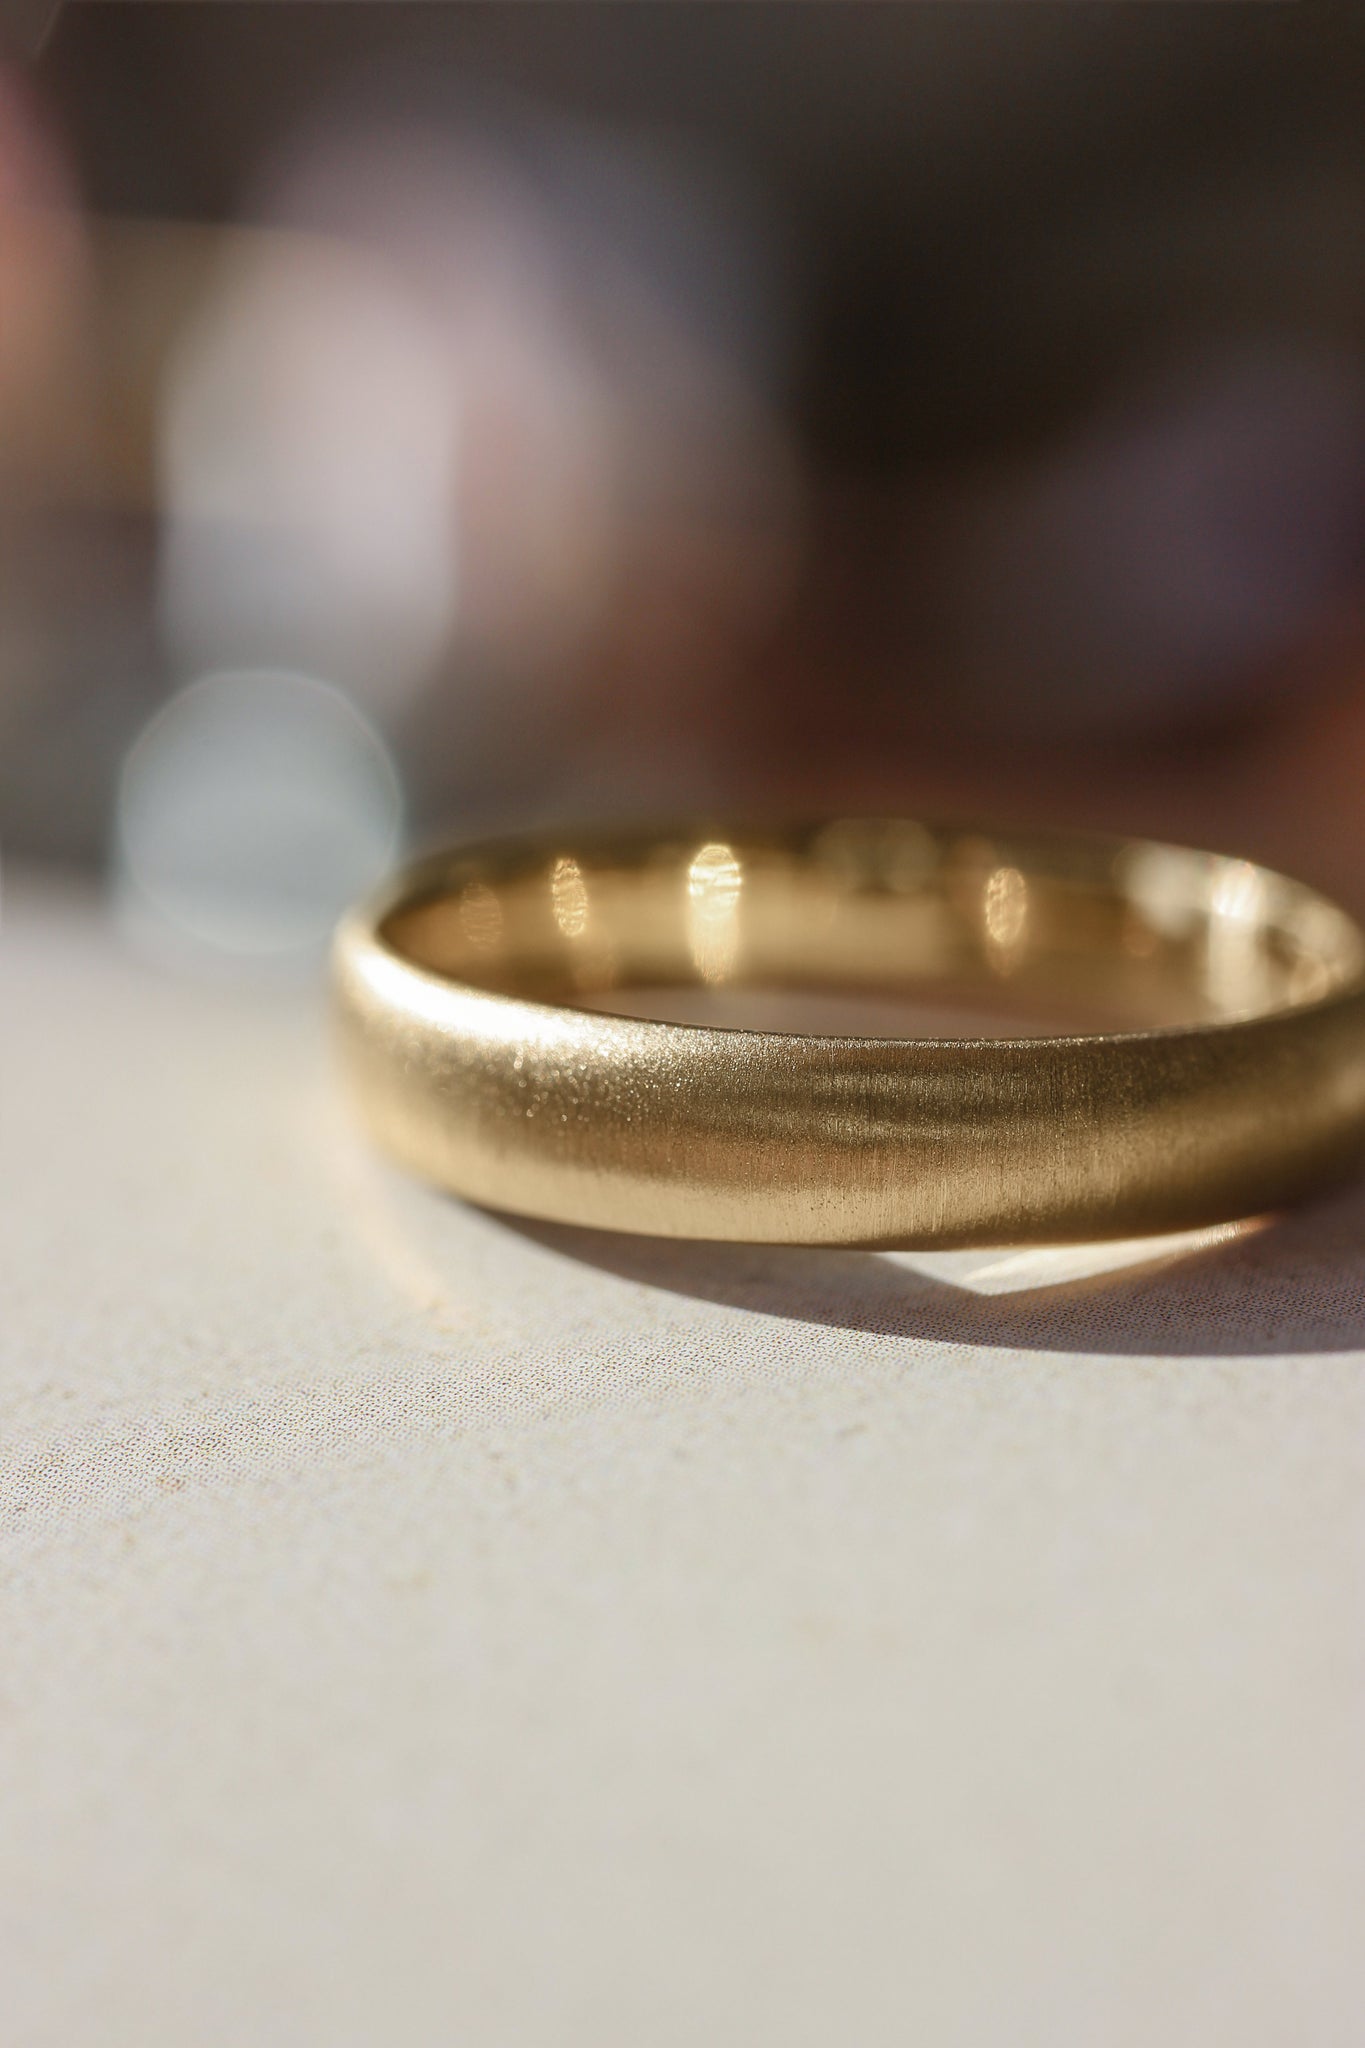 Satin finish gold ring, simple wedding band, 4 mm width - Eden Garden Jewelry™